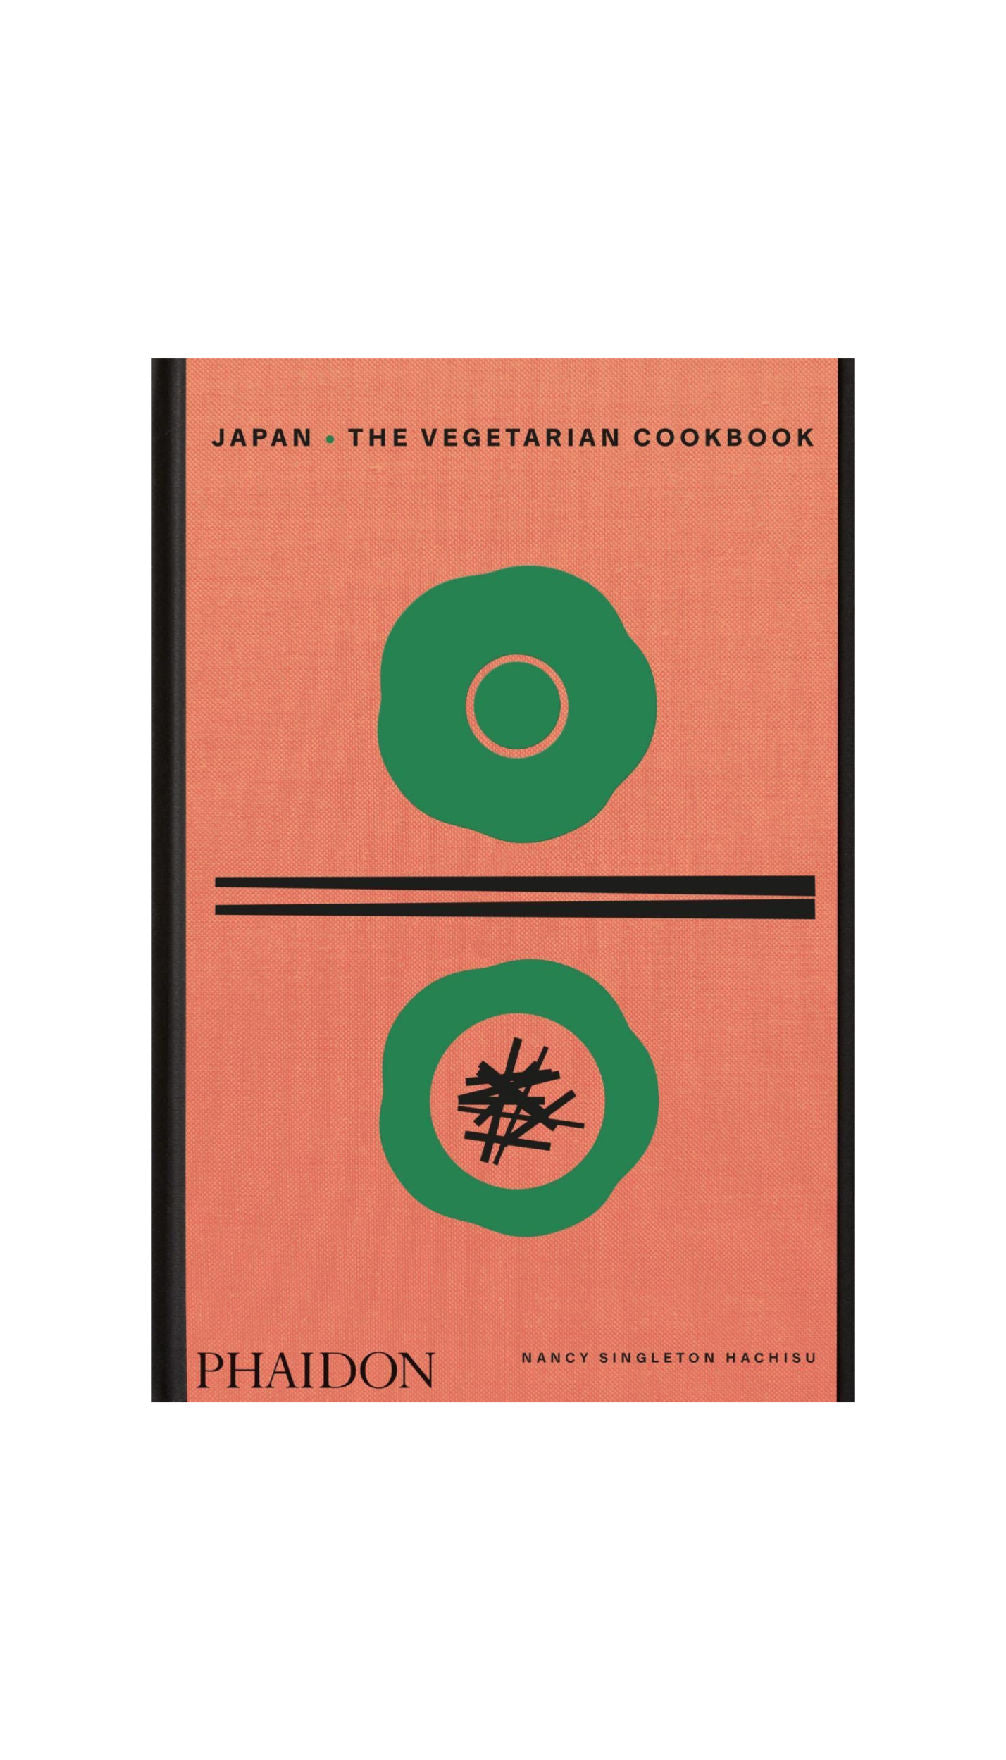 Japan: The Vegetarian Cookbook / NANCY SINGLETON HACHISU